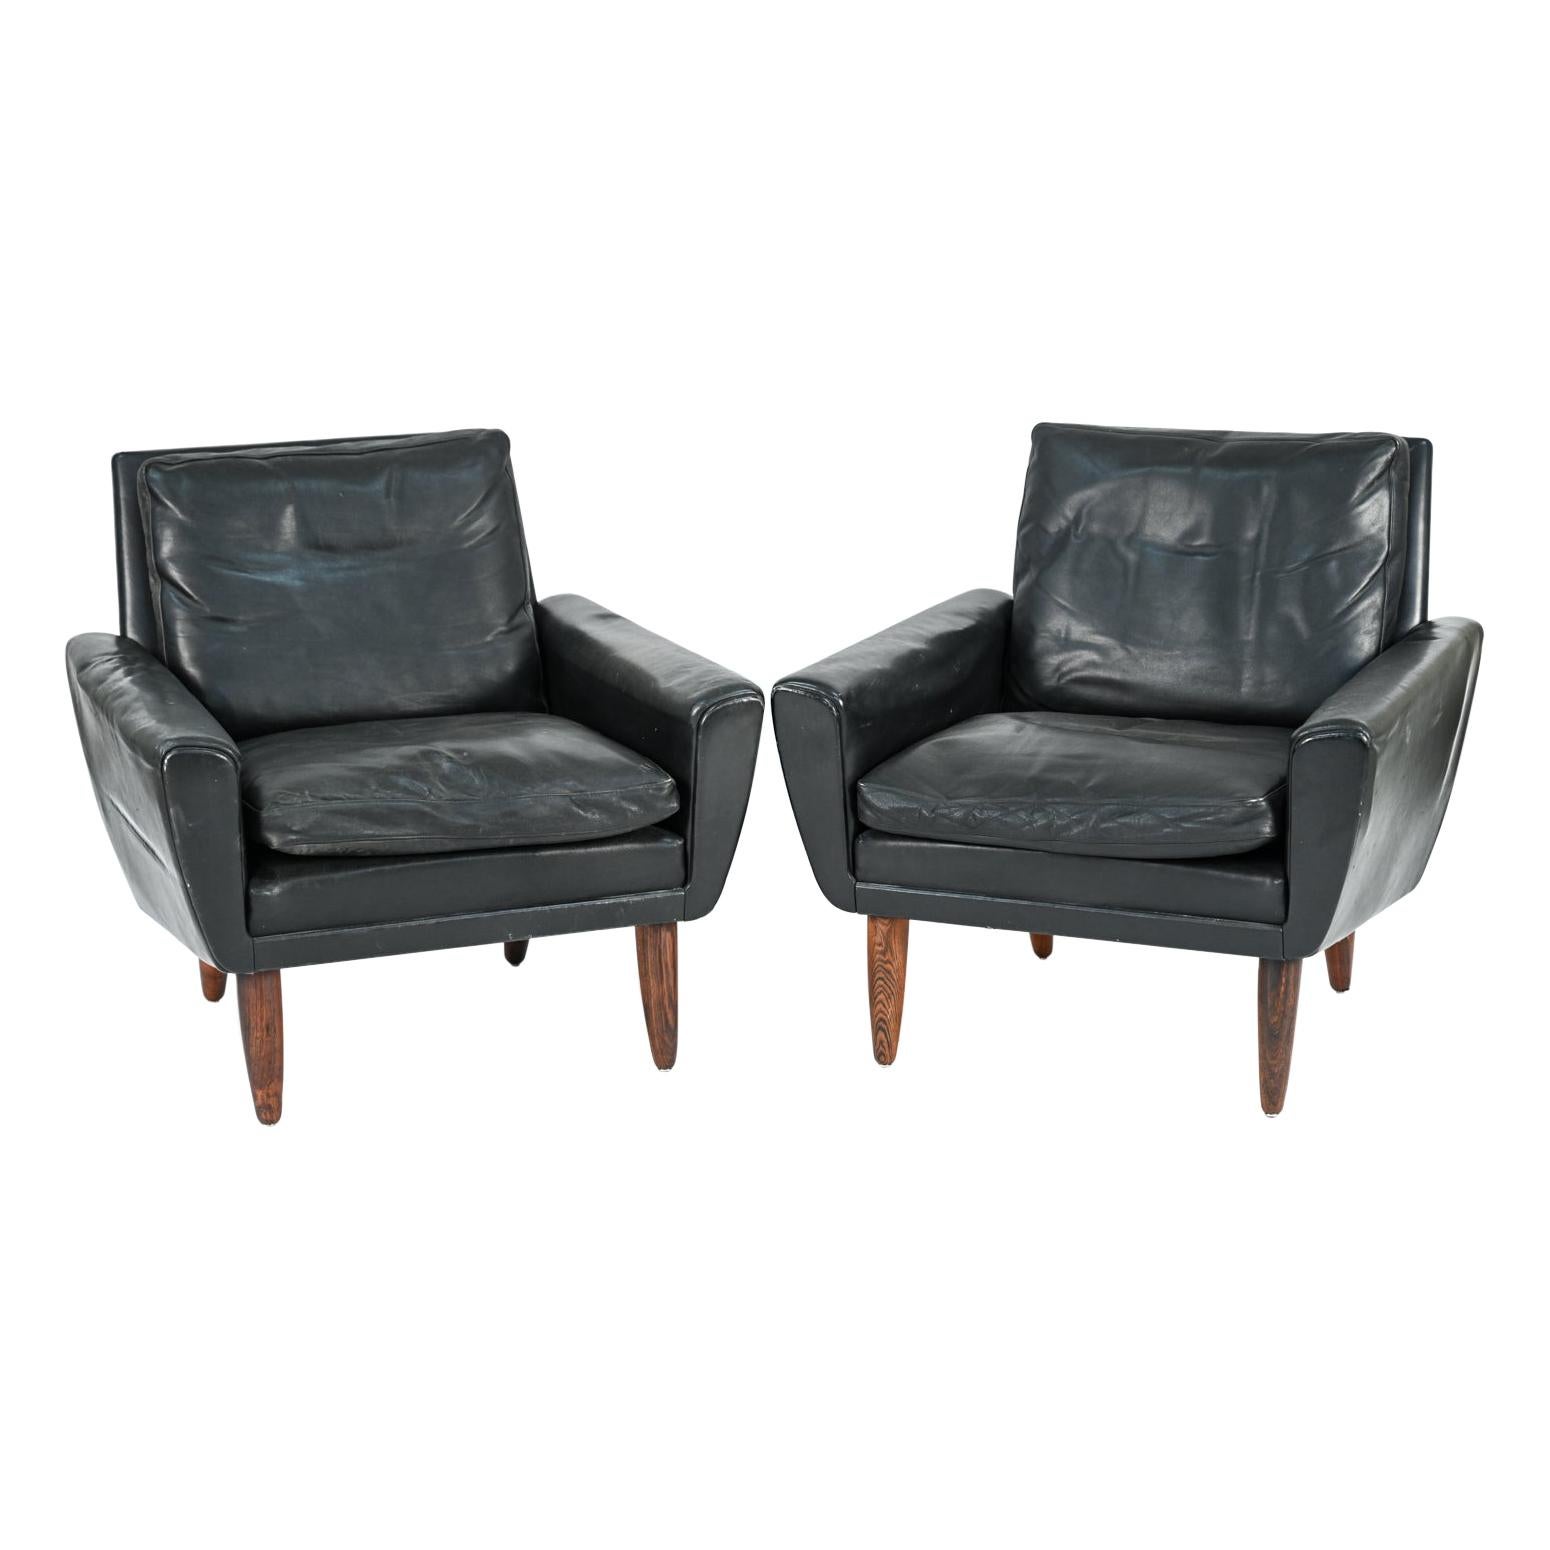 Pair of Tarm Danish Mid-Century Leather Lounge Chairs